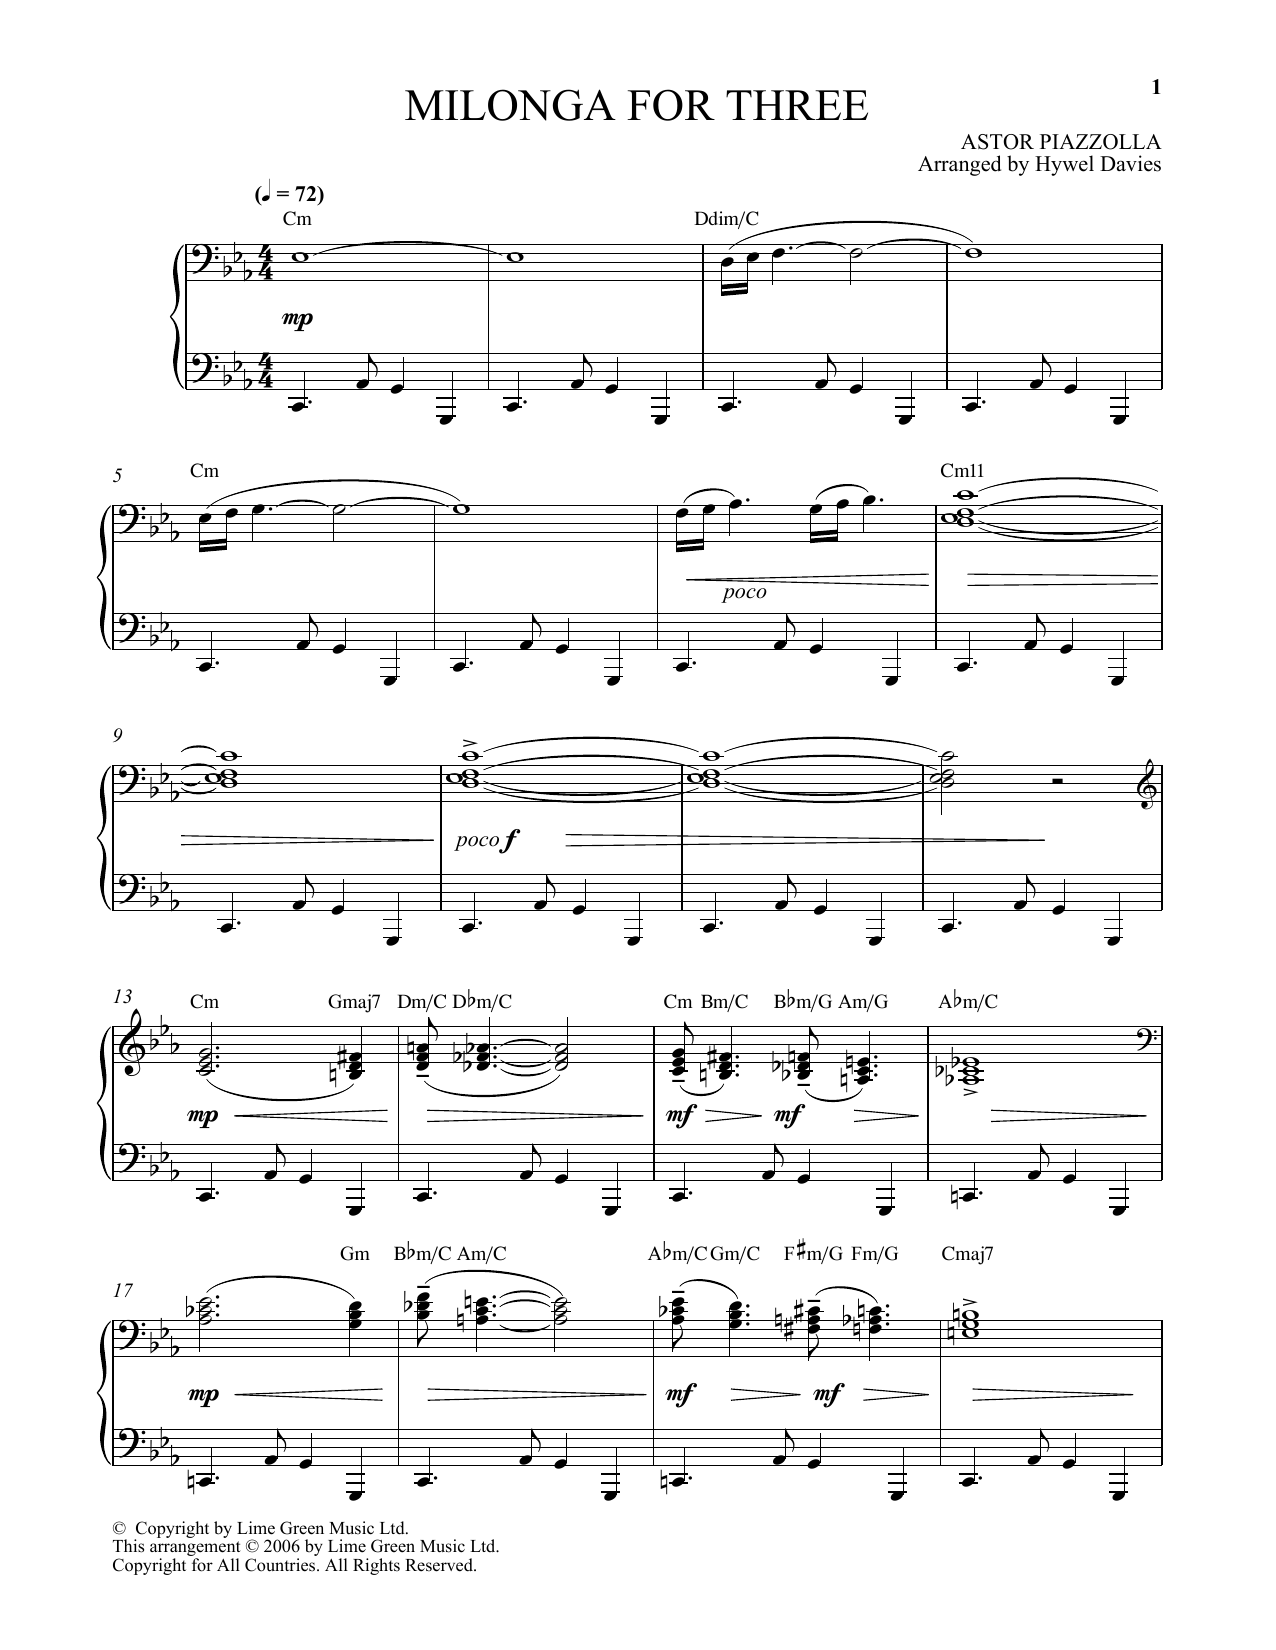 Download Astor Piazzolla Milonga For Three Sheet Music